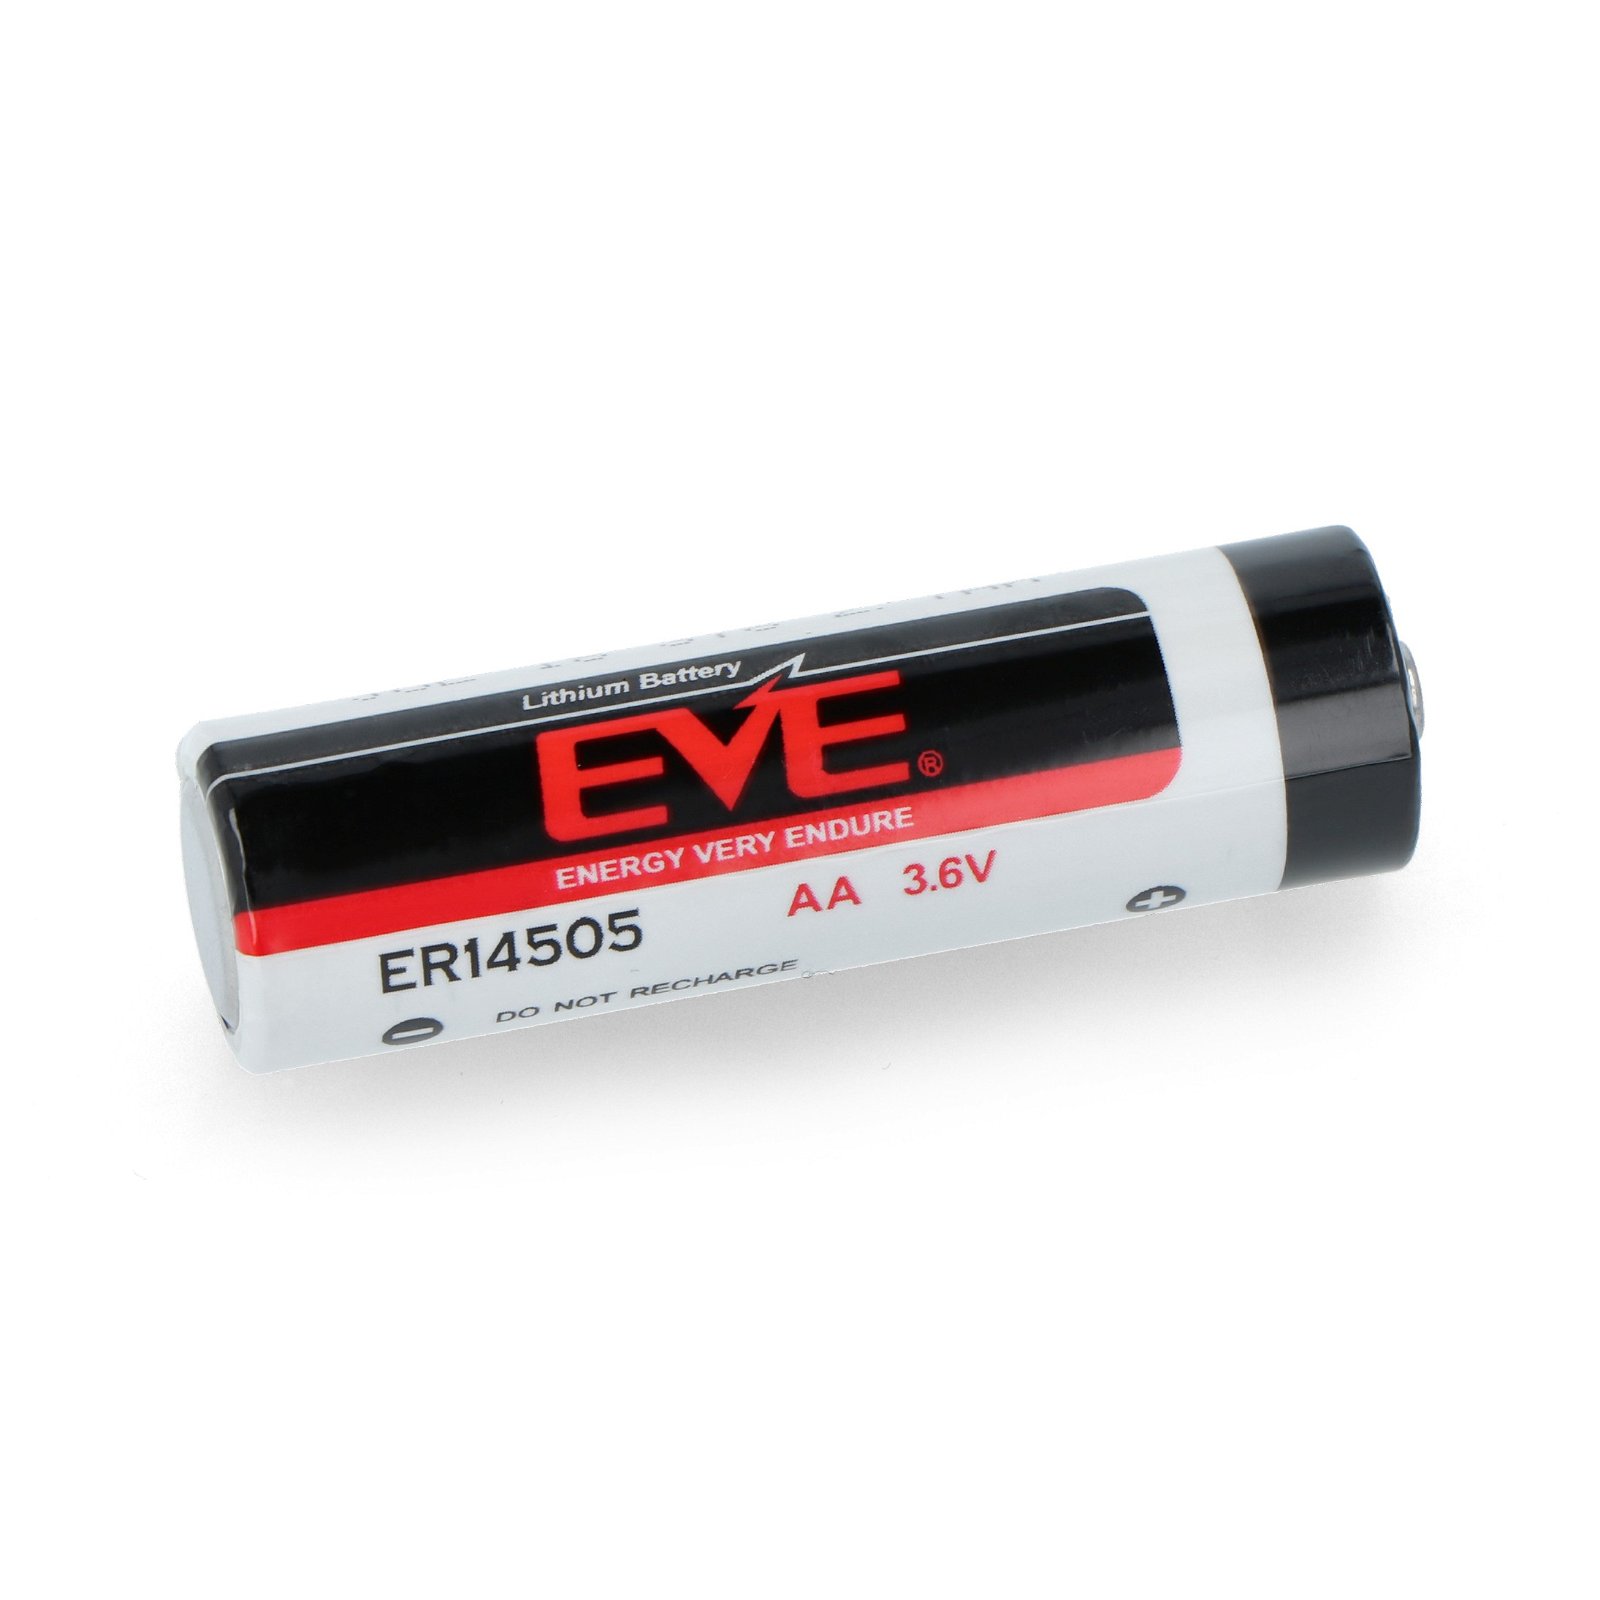 Lithium battery 3.6V AA 2700 mAh Eve Battery